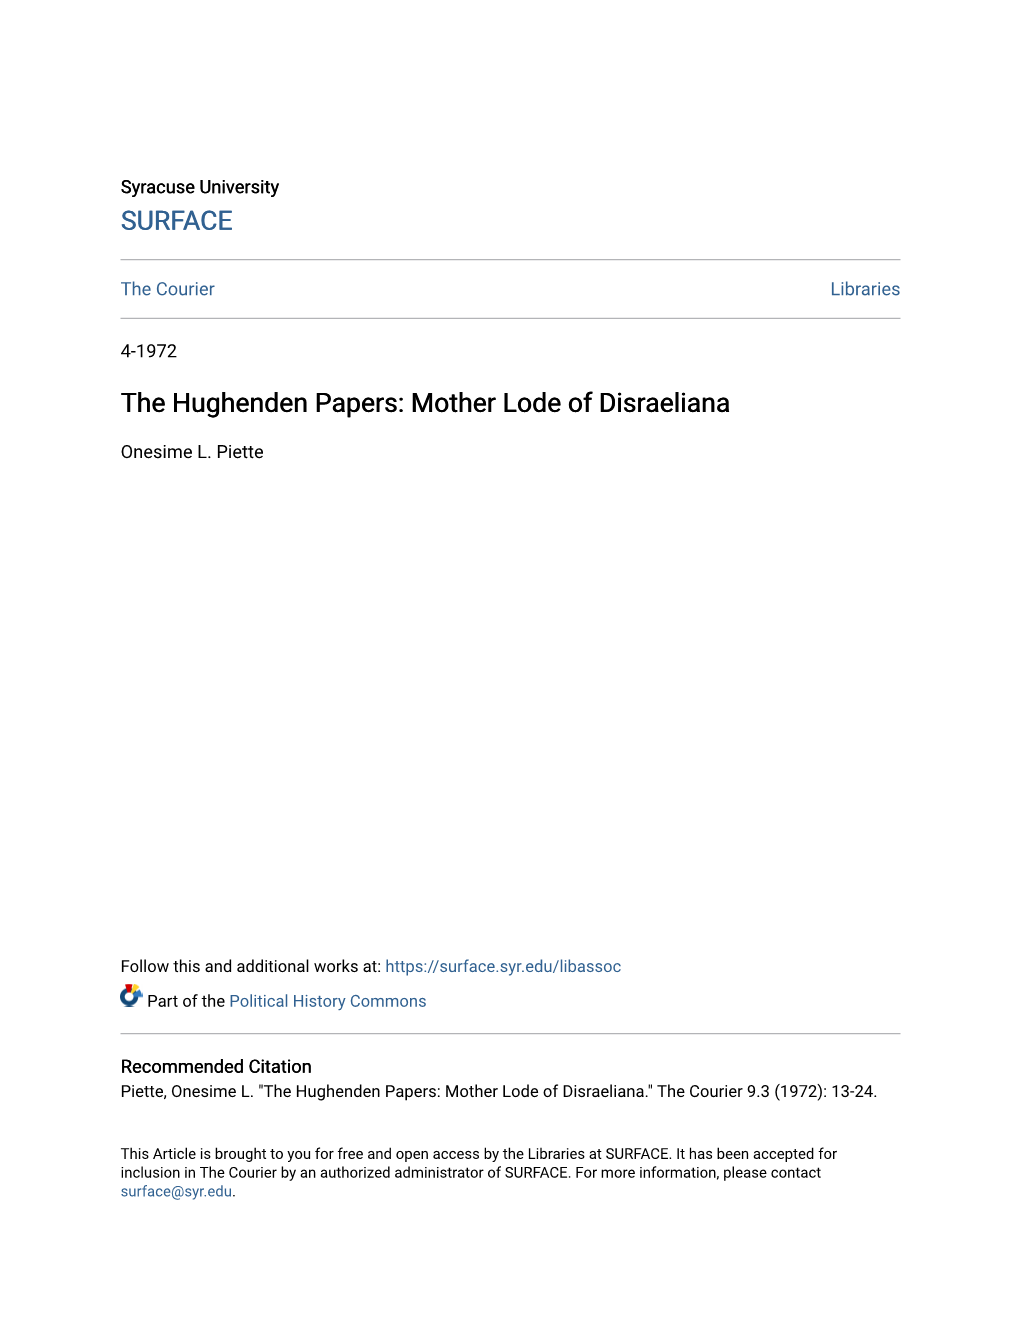 The Hughenden Papers: Mother Lode of Disraeliana